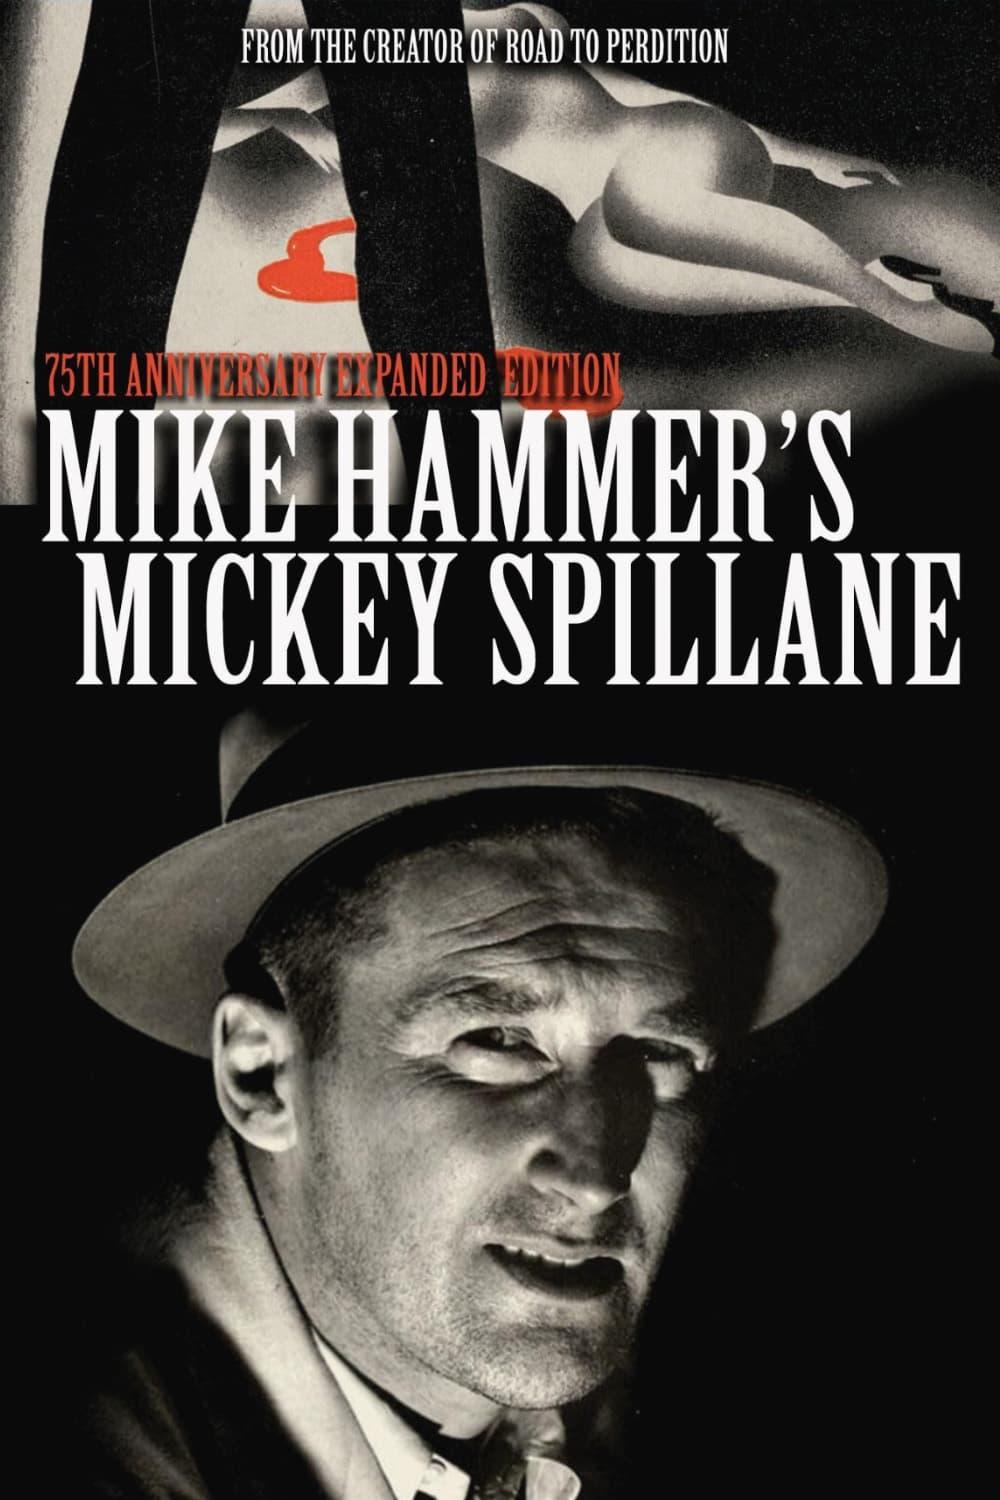 Mike Hammer's Mickey Spillane poster